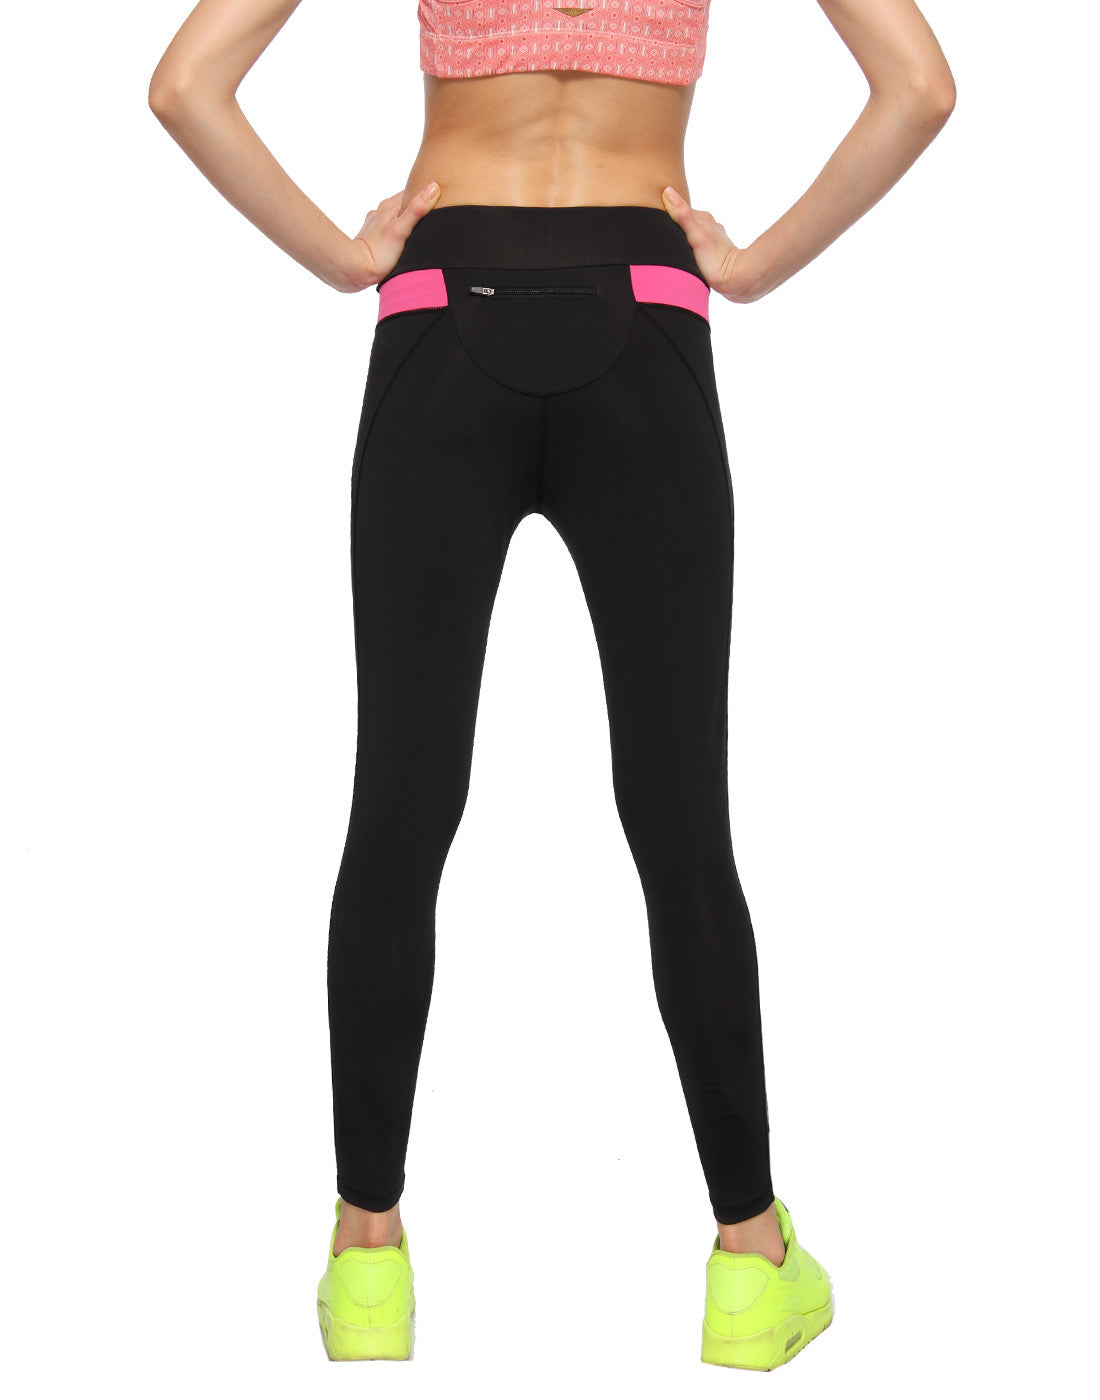 Anti-bacterial ultra flex-quick dry leggings - Zebo Active Wear